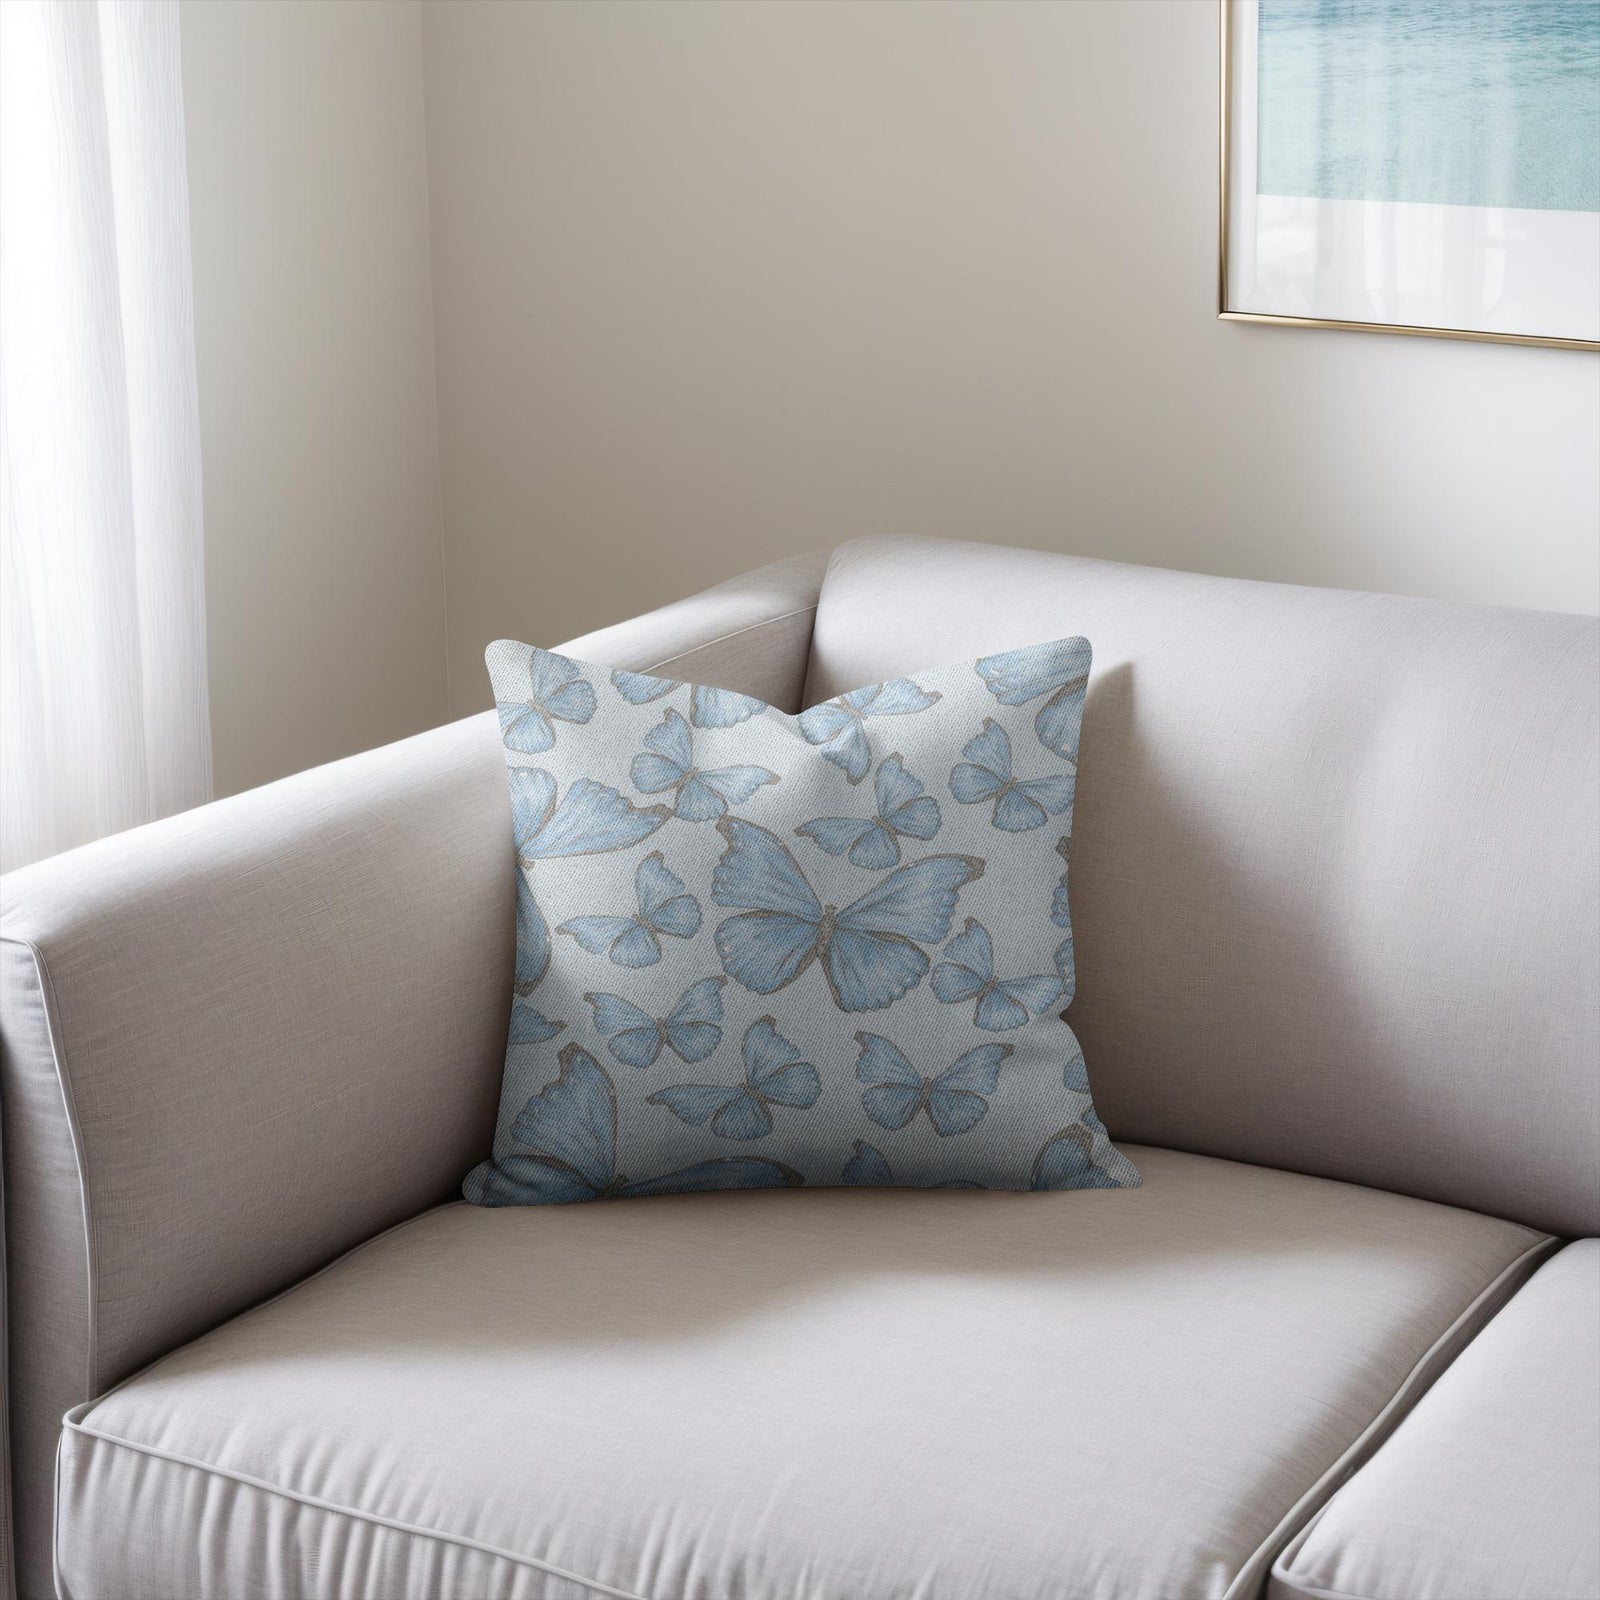 Cotton/poly blend woven pillow cramer’s blue morpho butterfly pattern